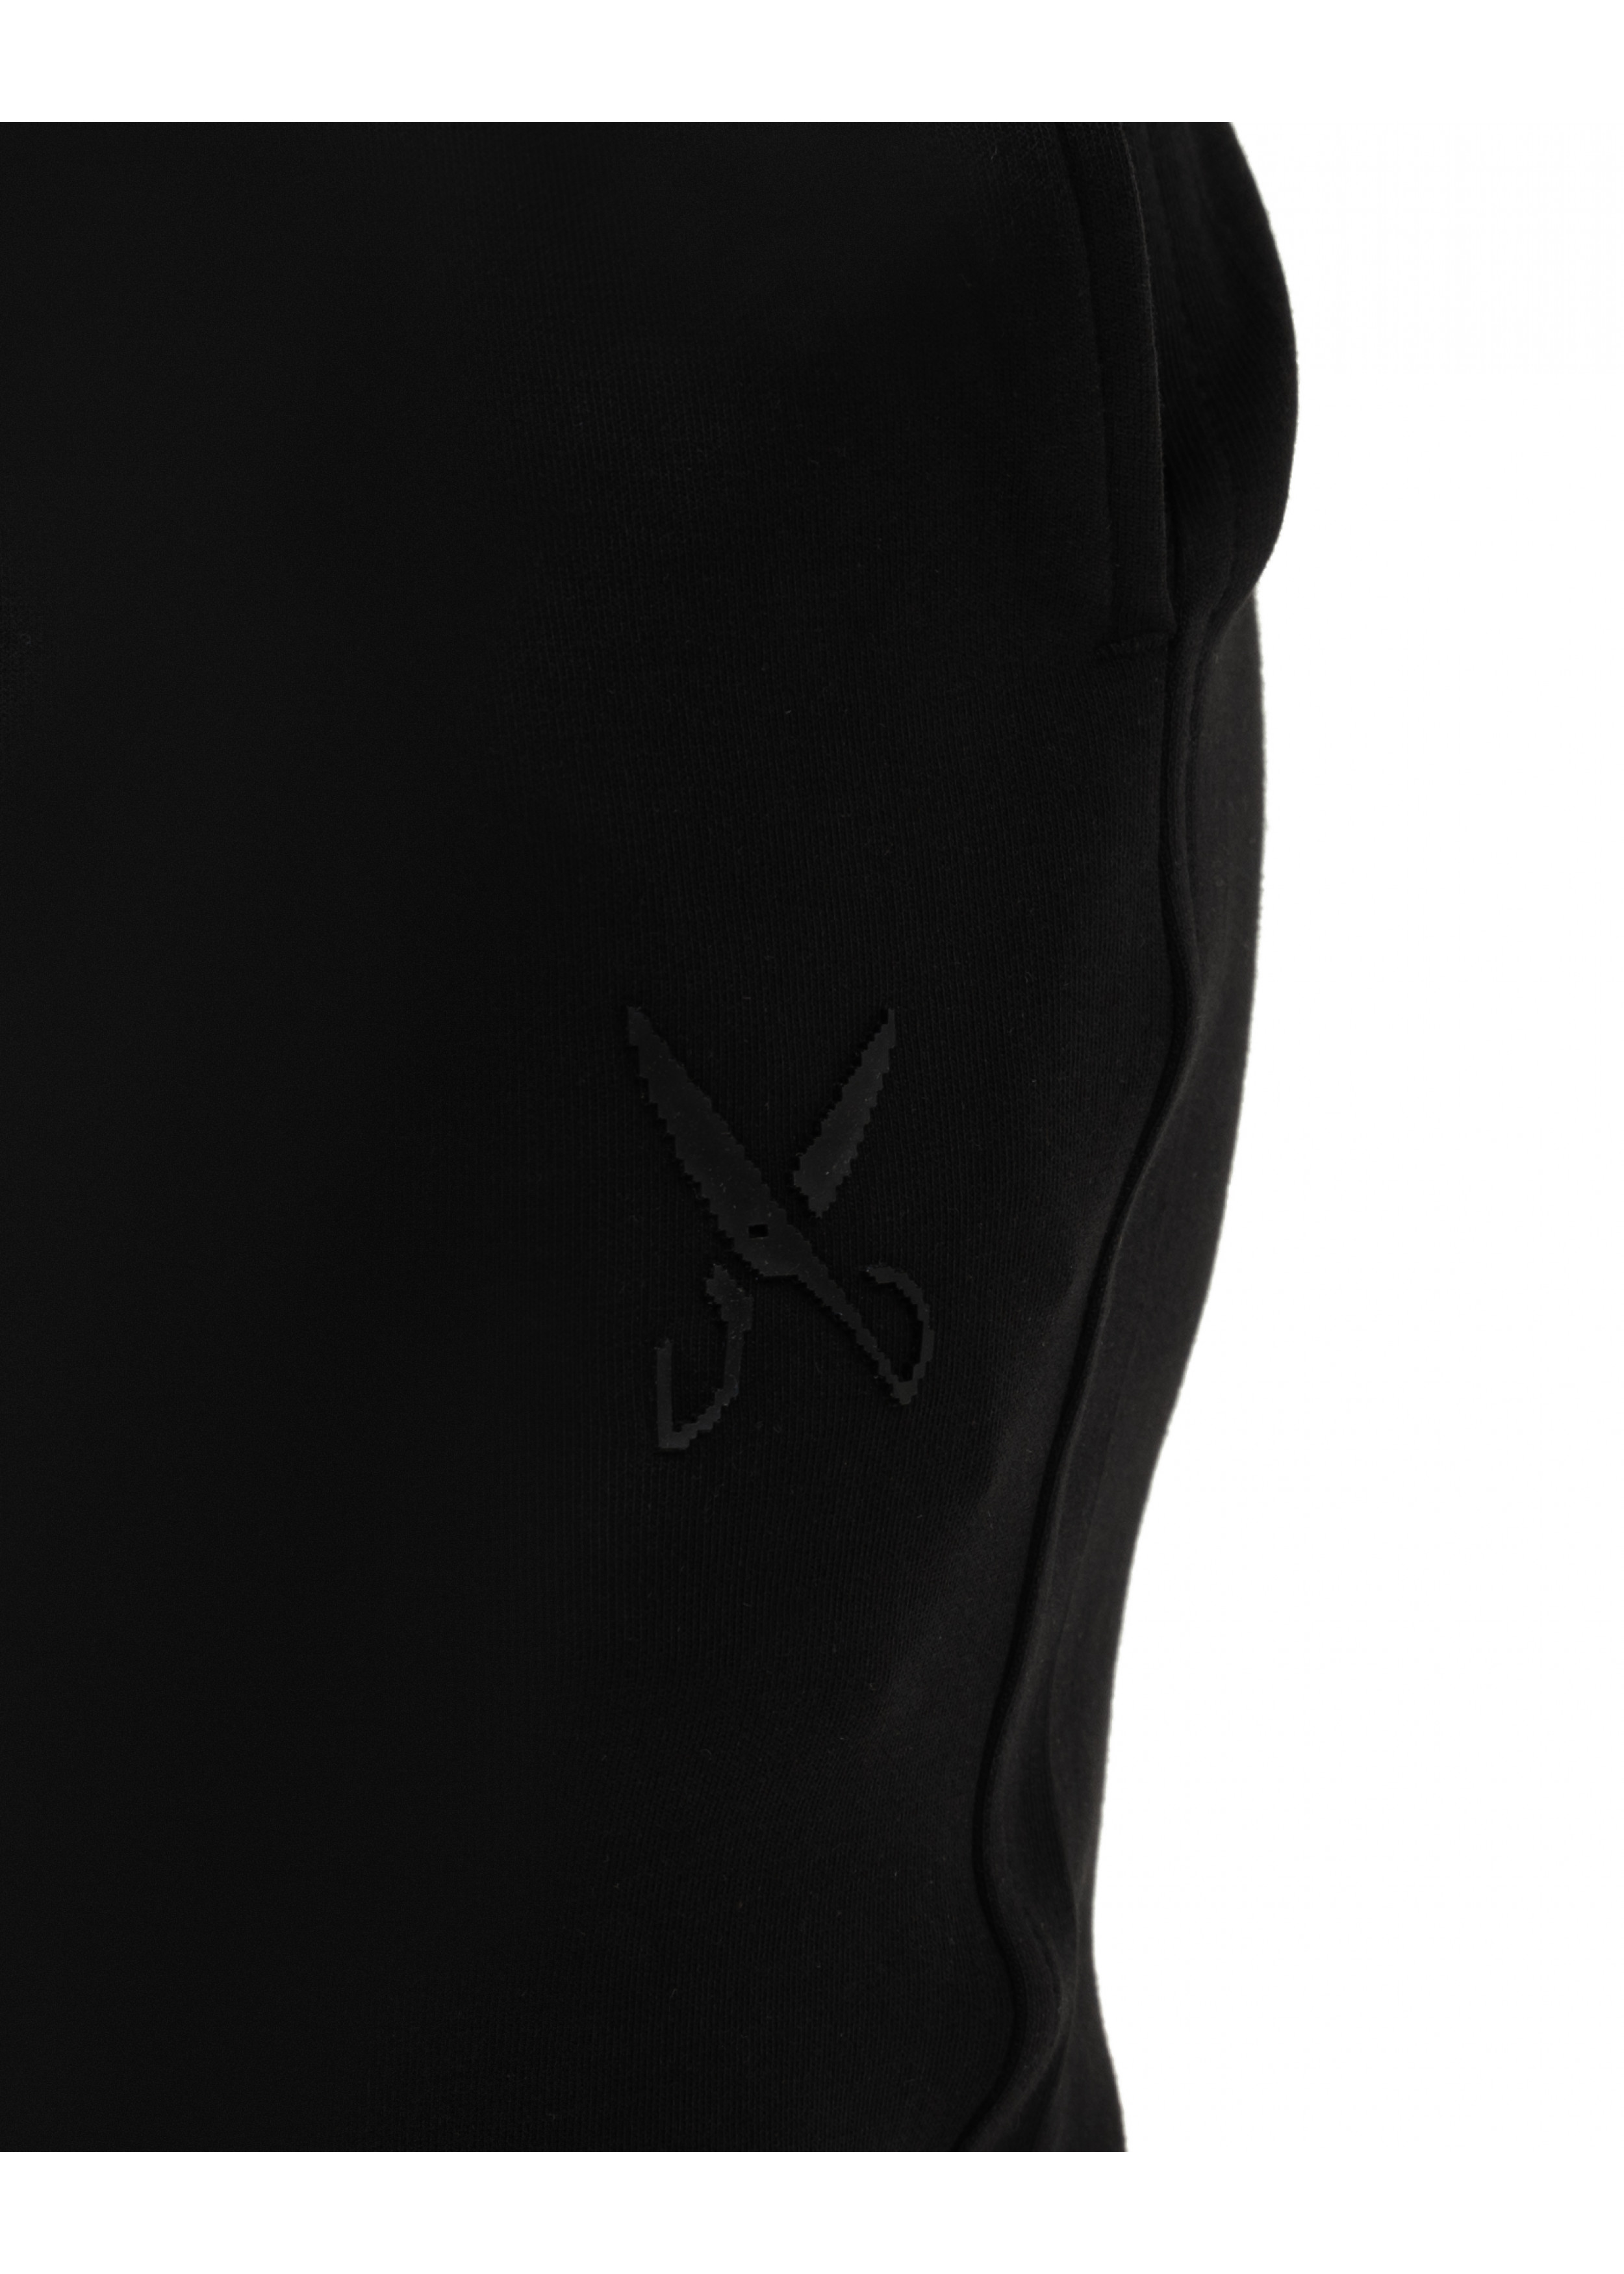  Pants zigzag logo - Black